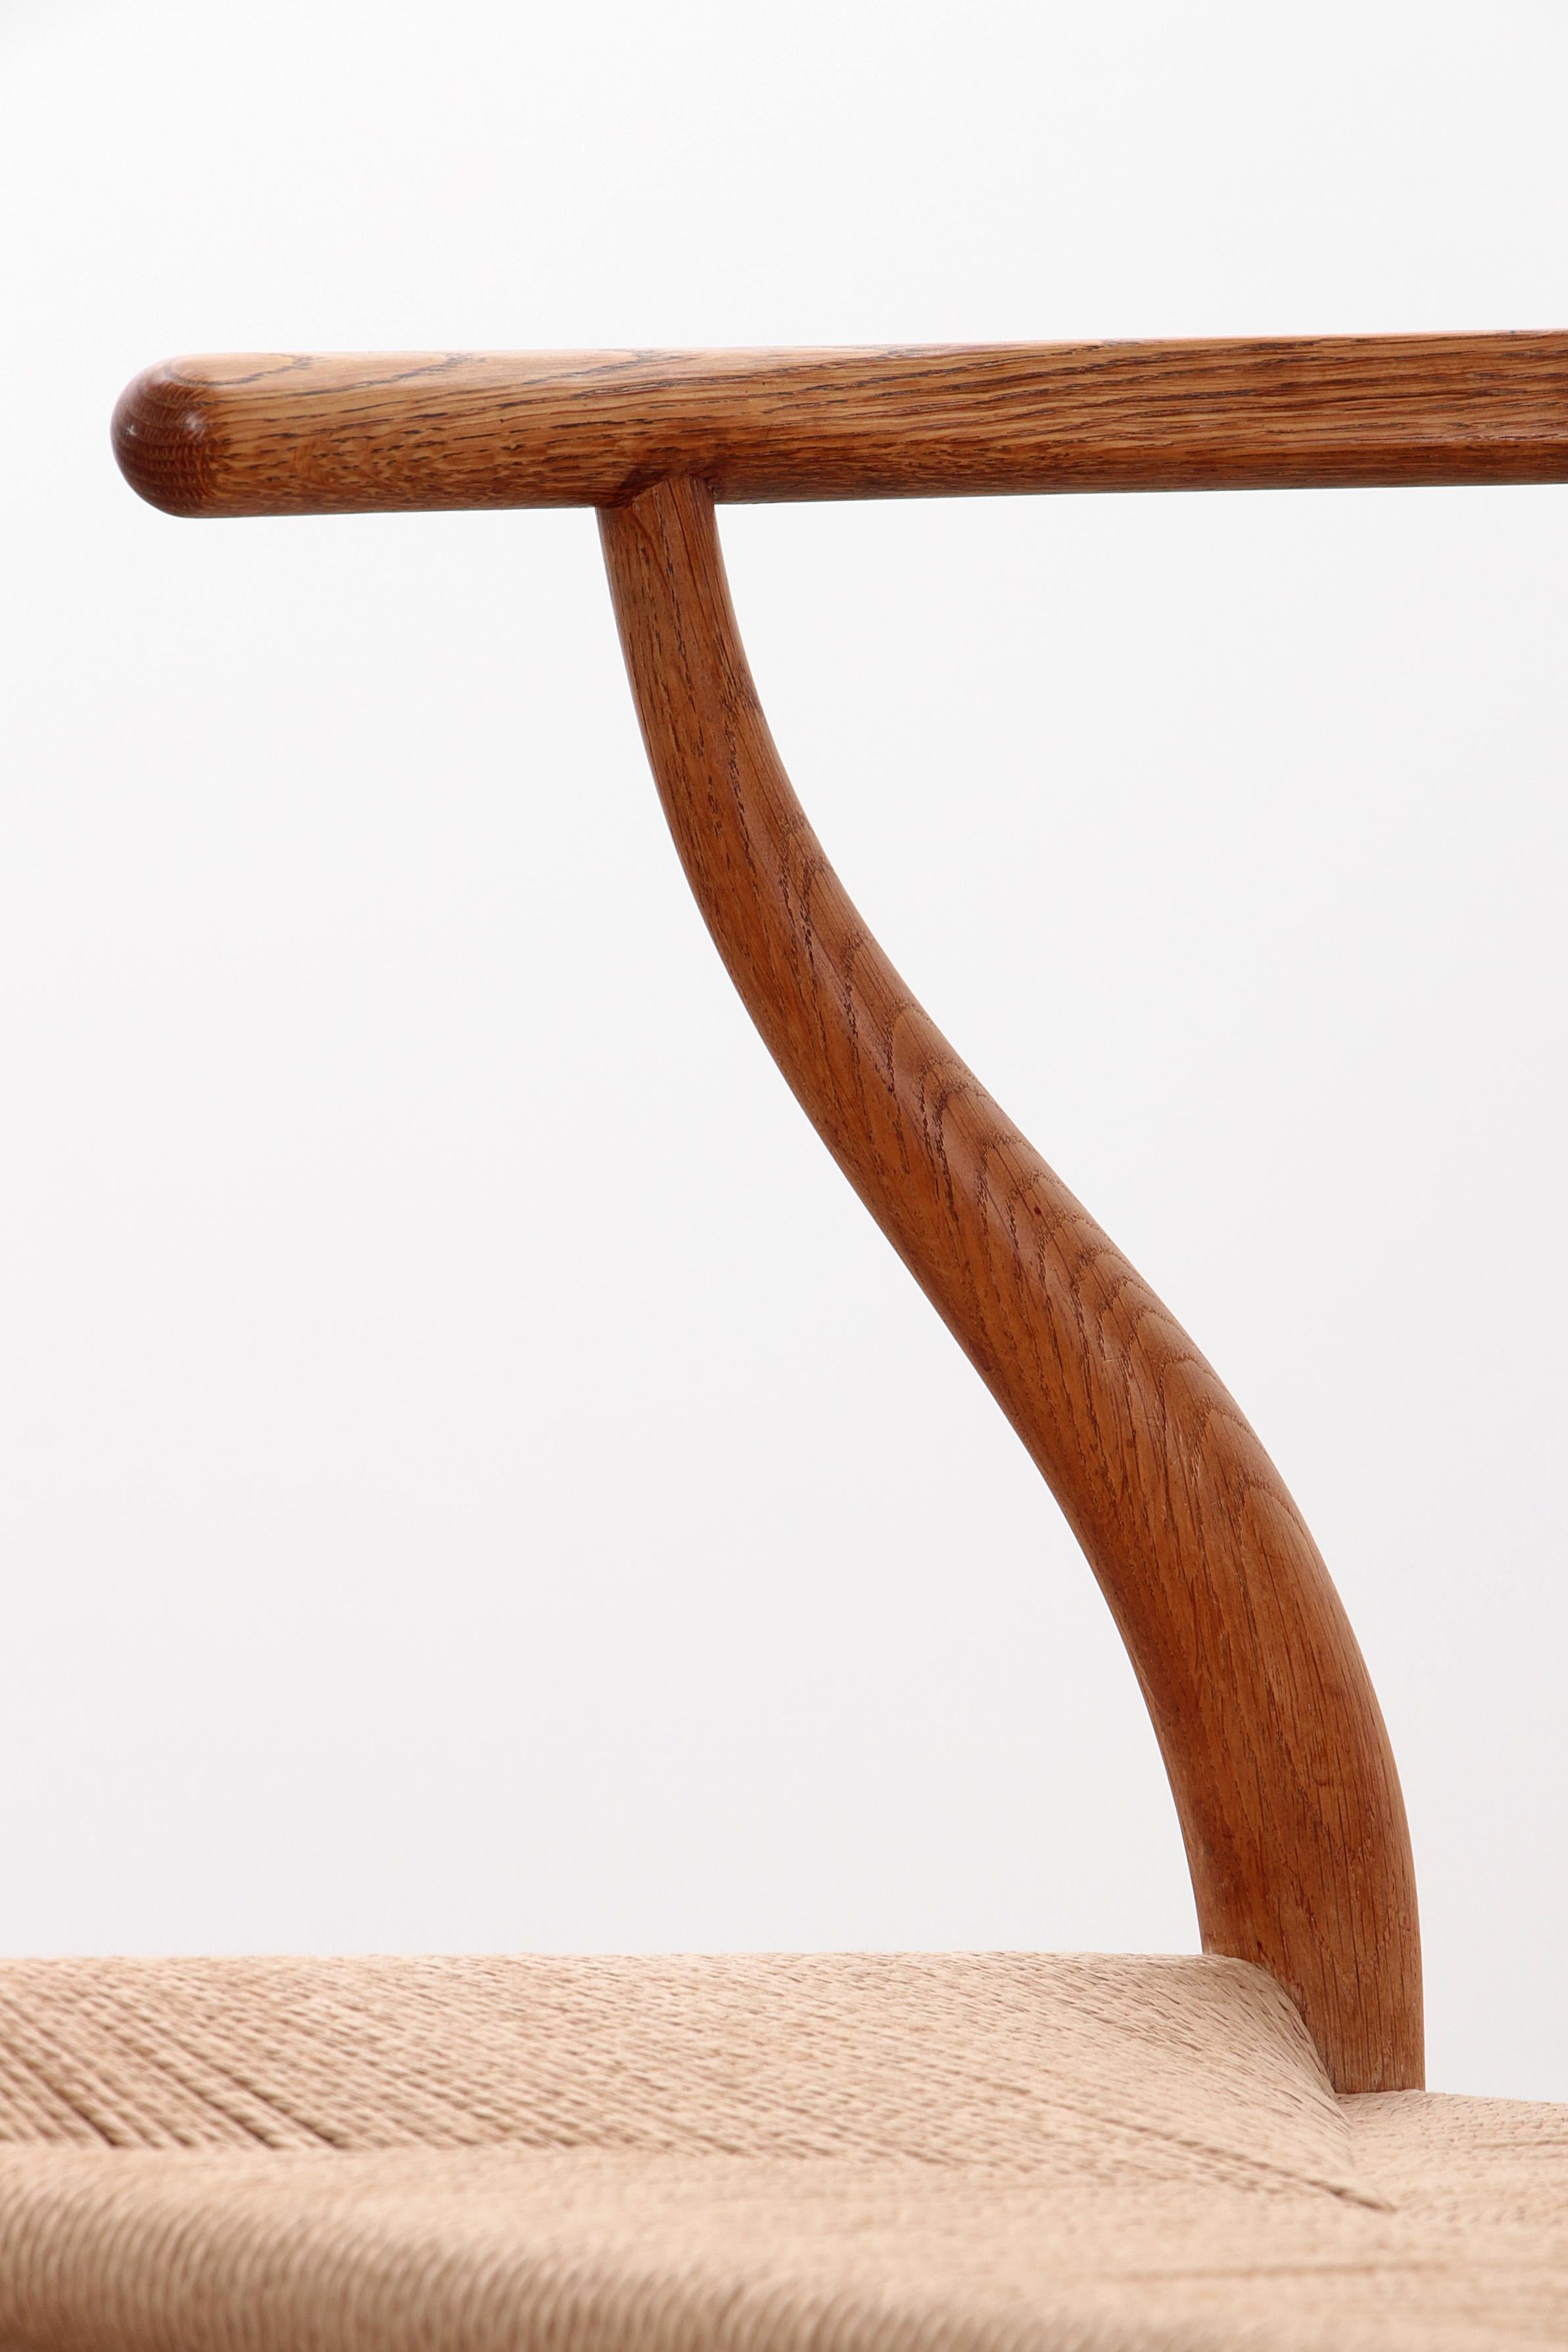 Hans Wegner Oak Wishbone Chairs made by Carl Hansen&Son 5